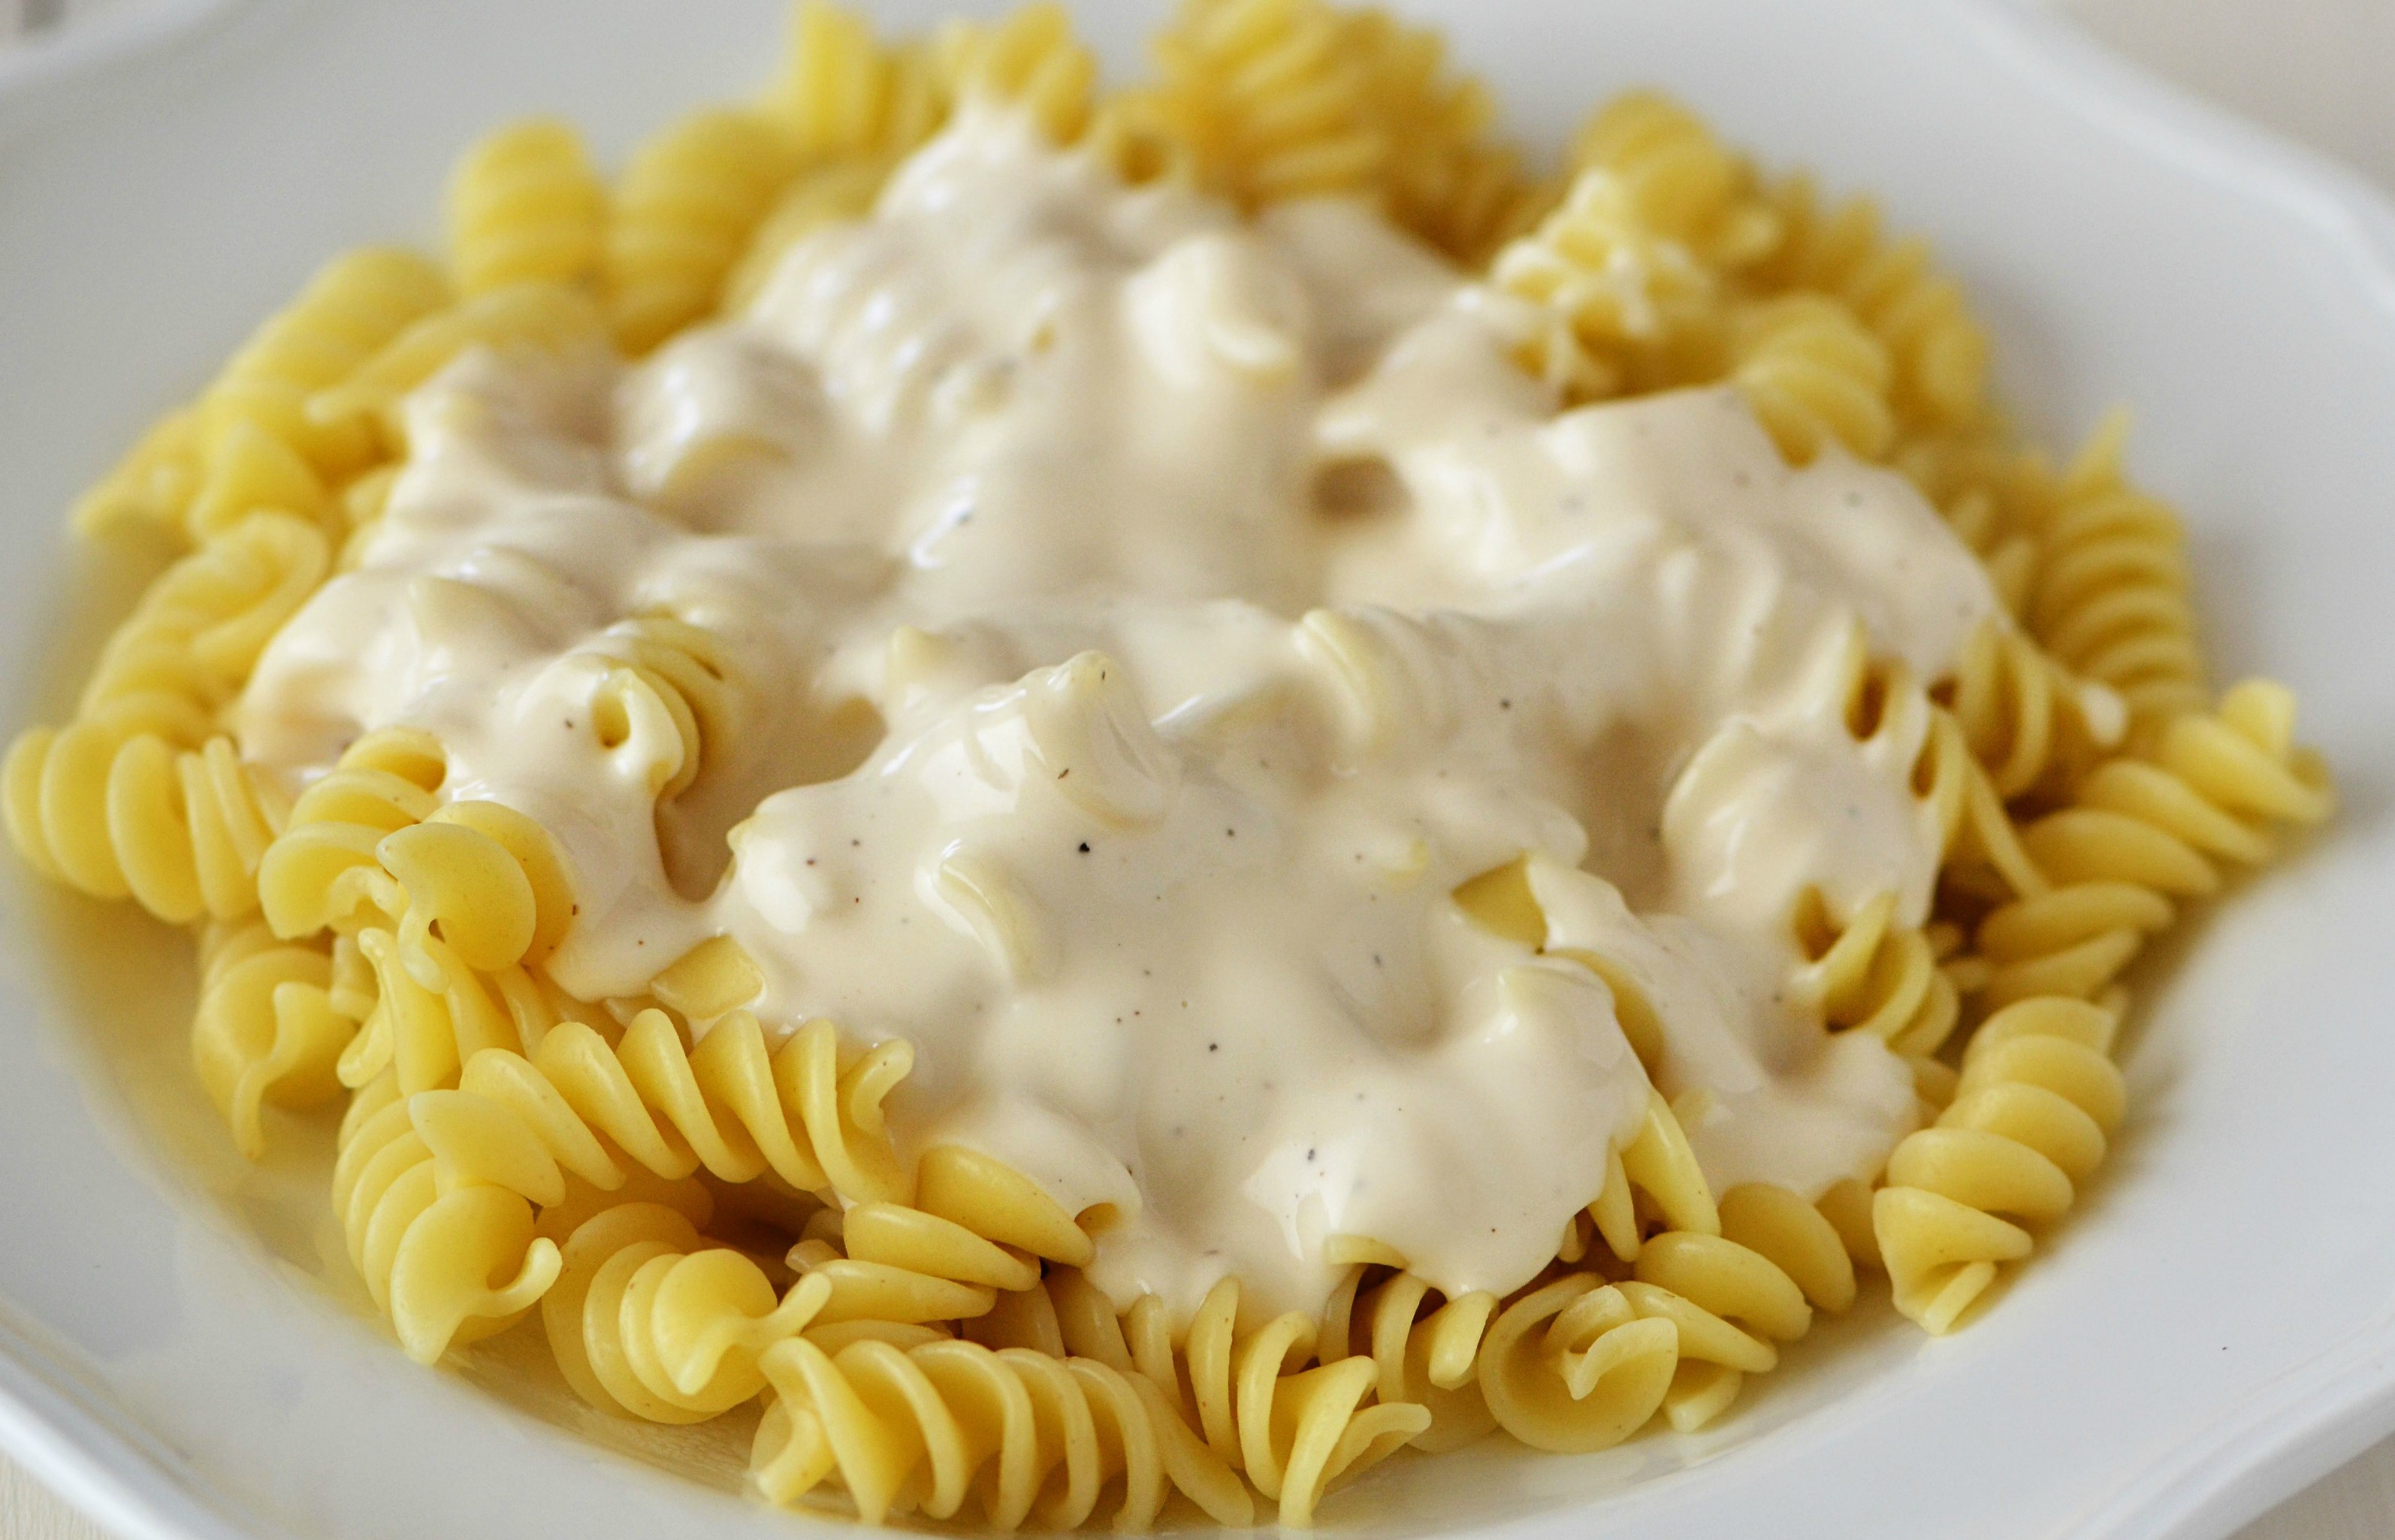 White sauce over pasta.